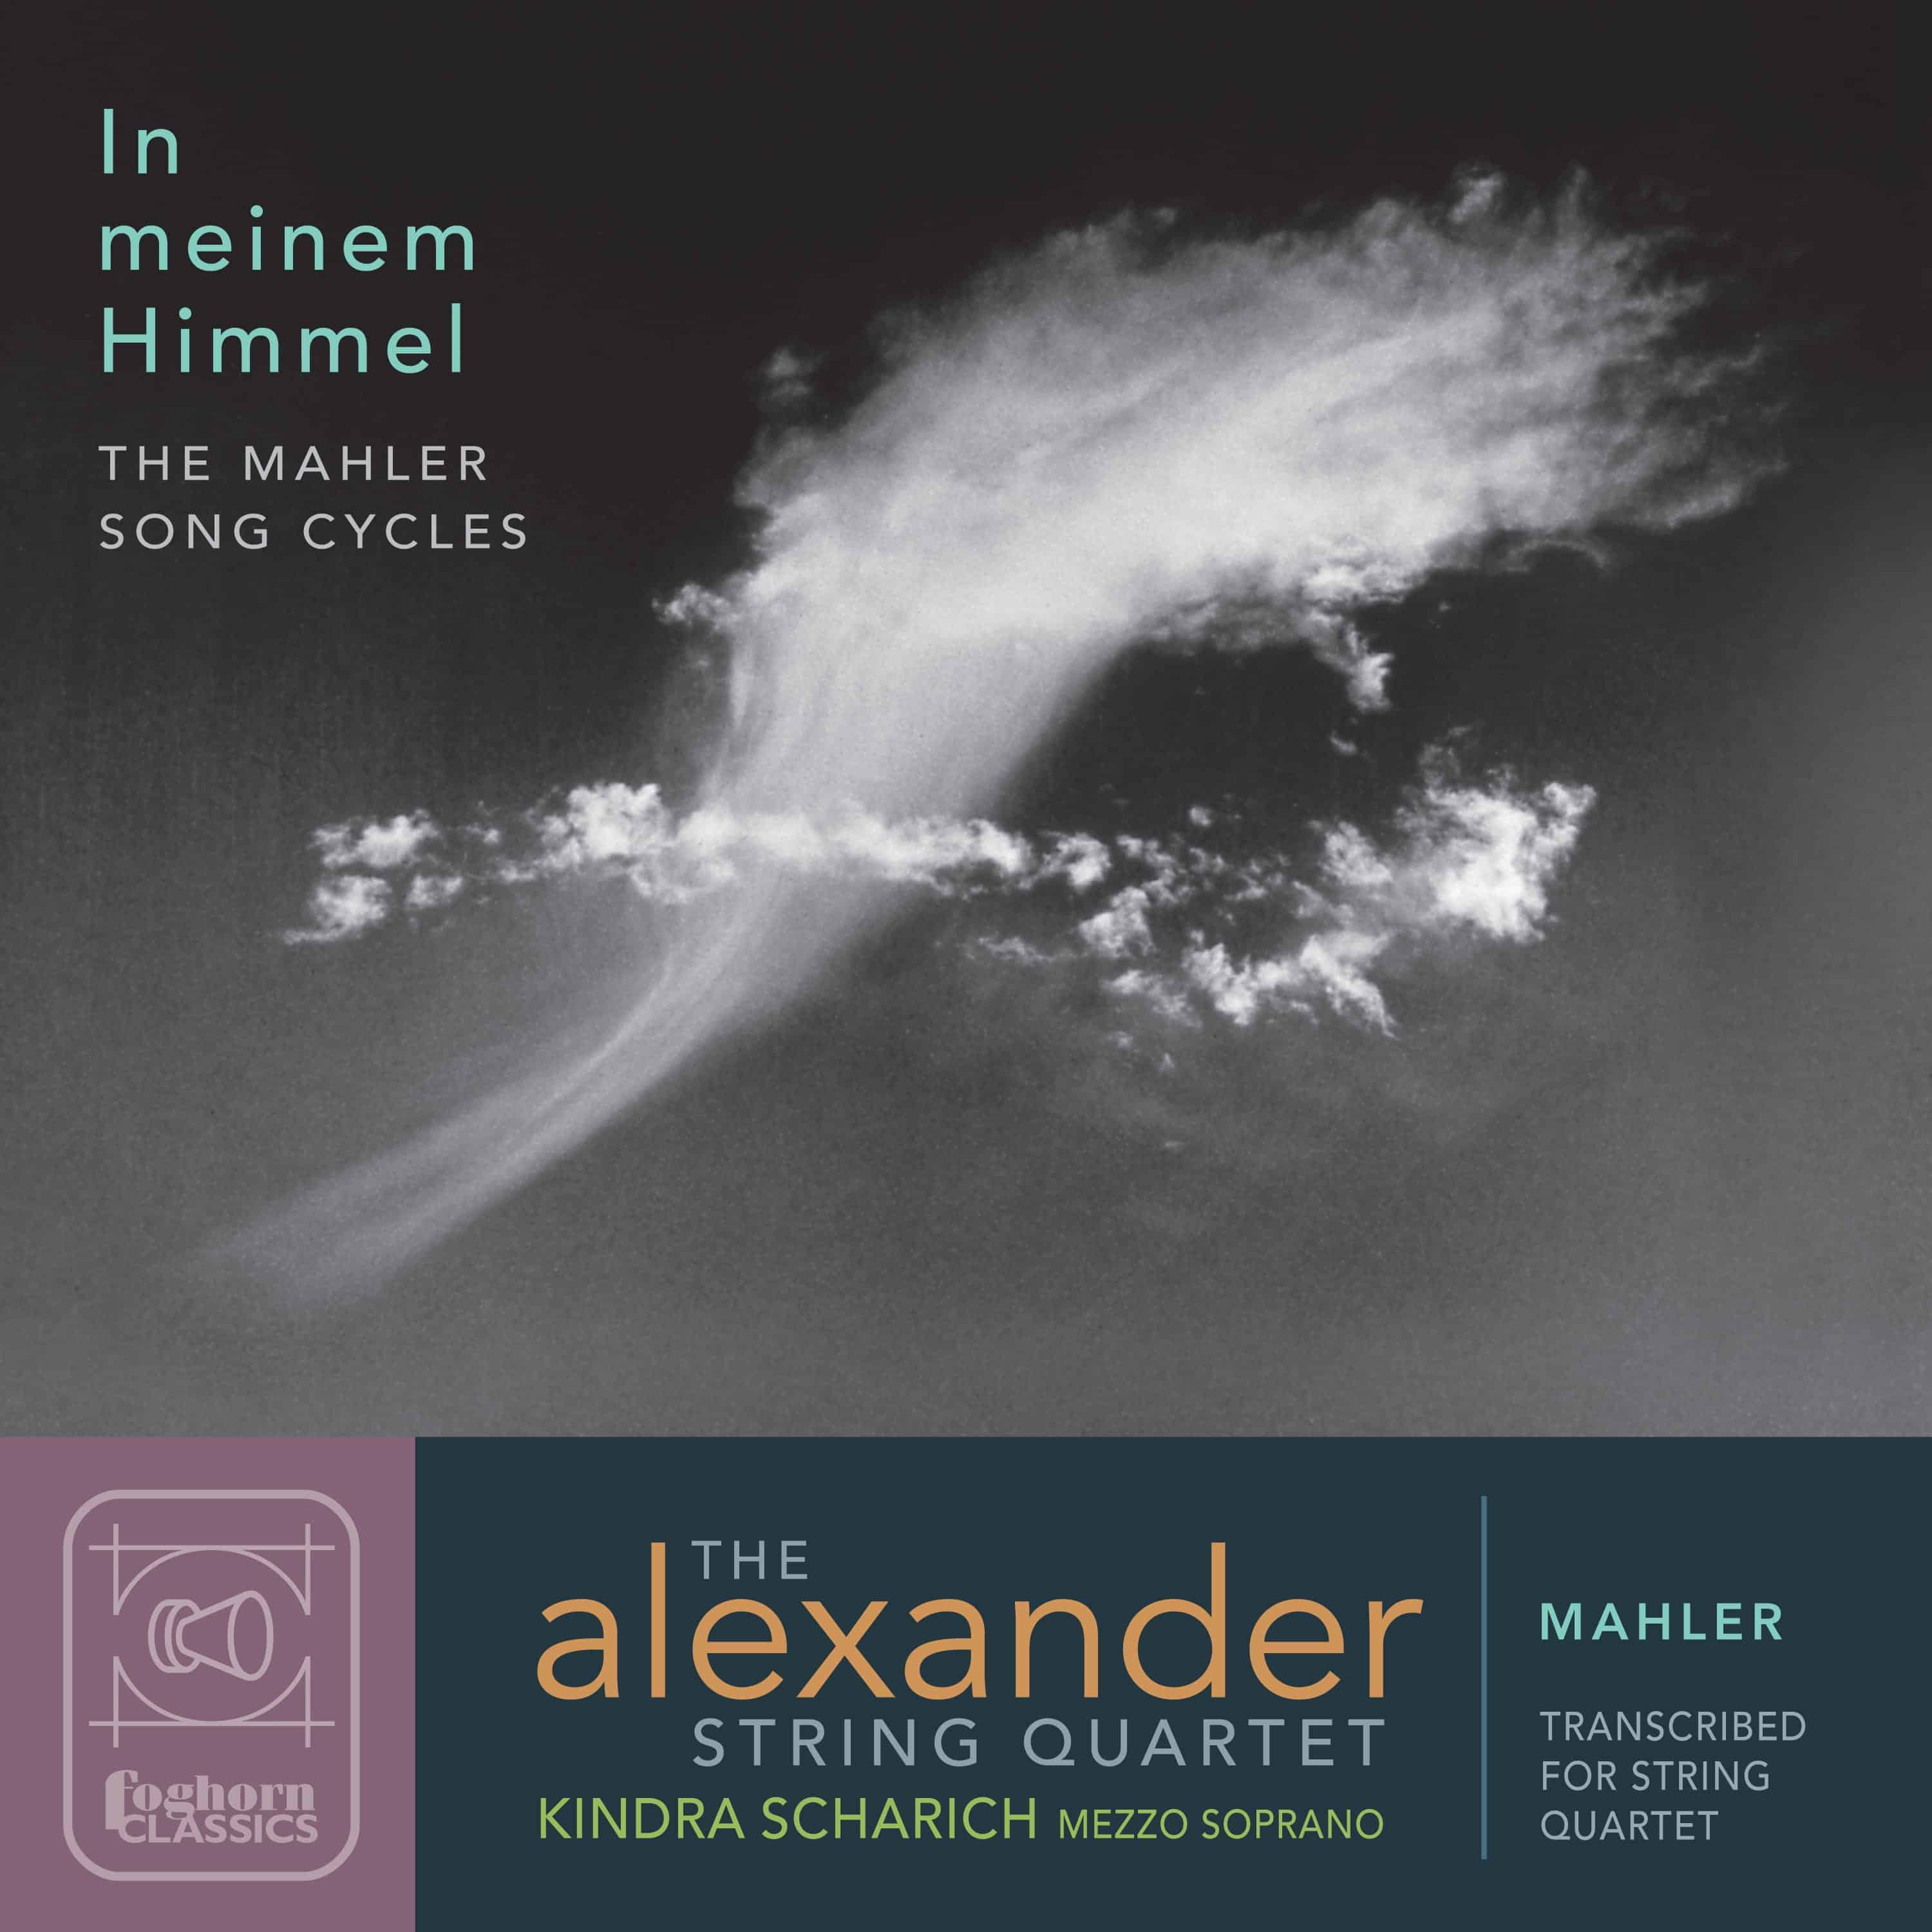 Mahler Song Cycles: In meinem Himmel